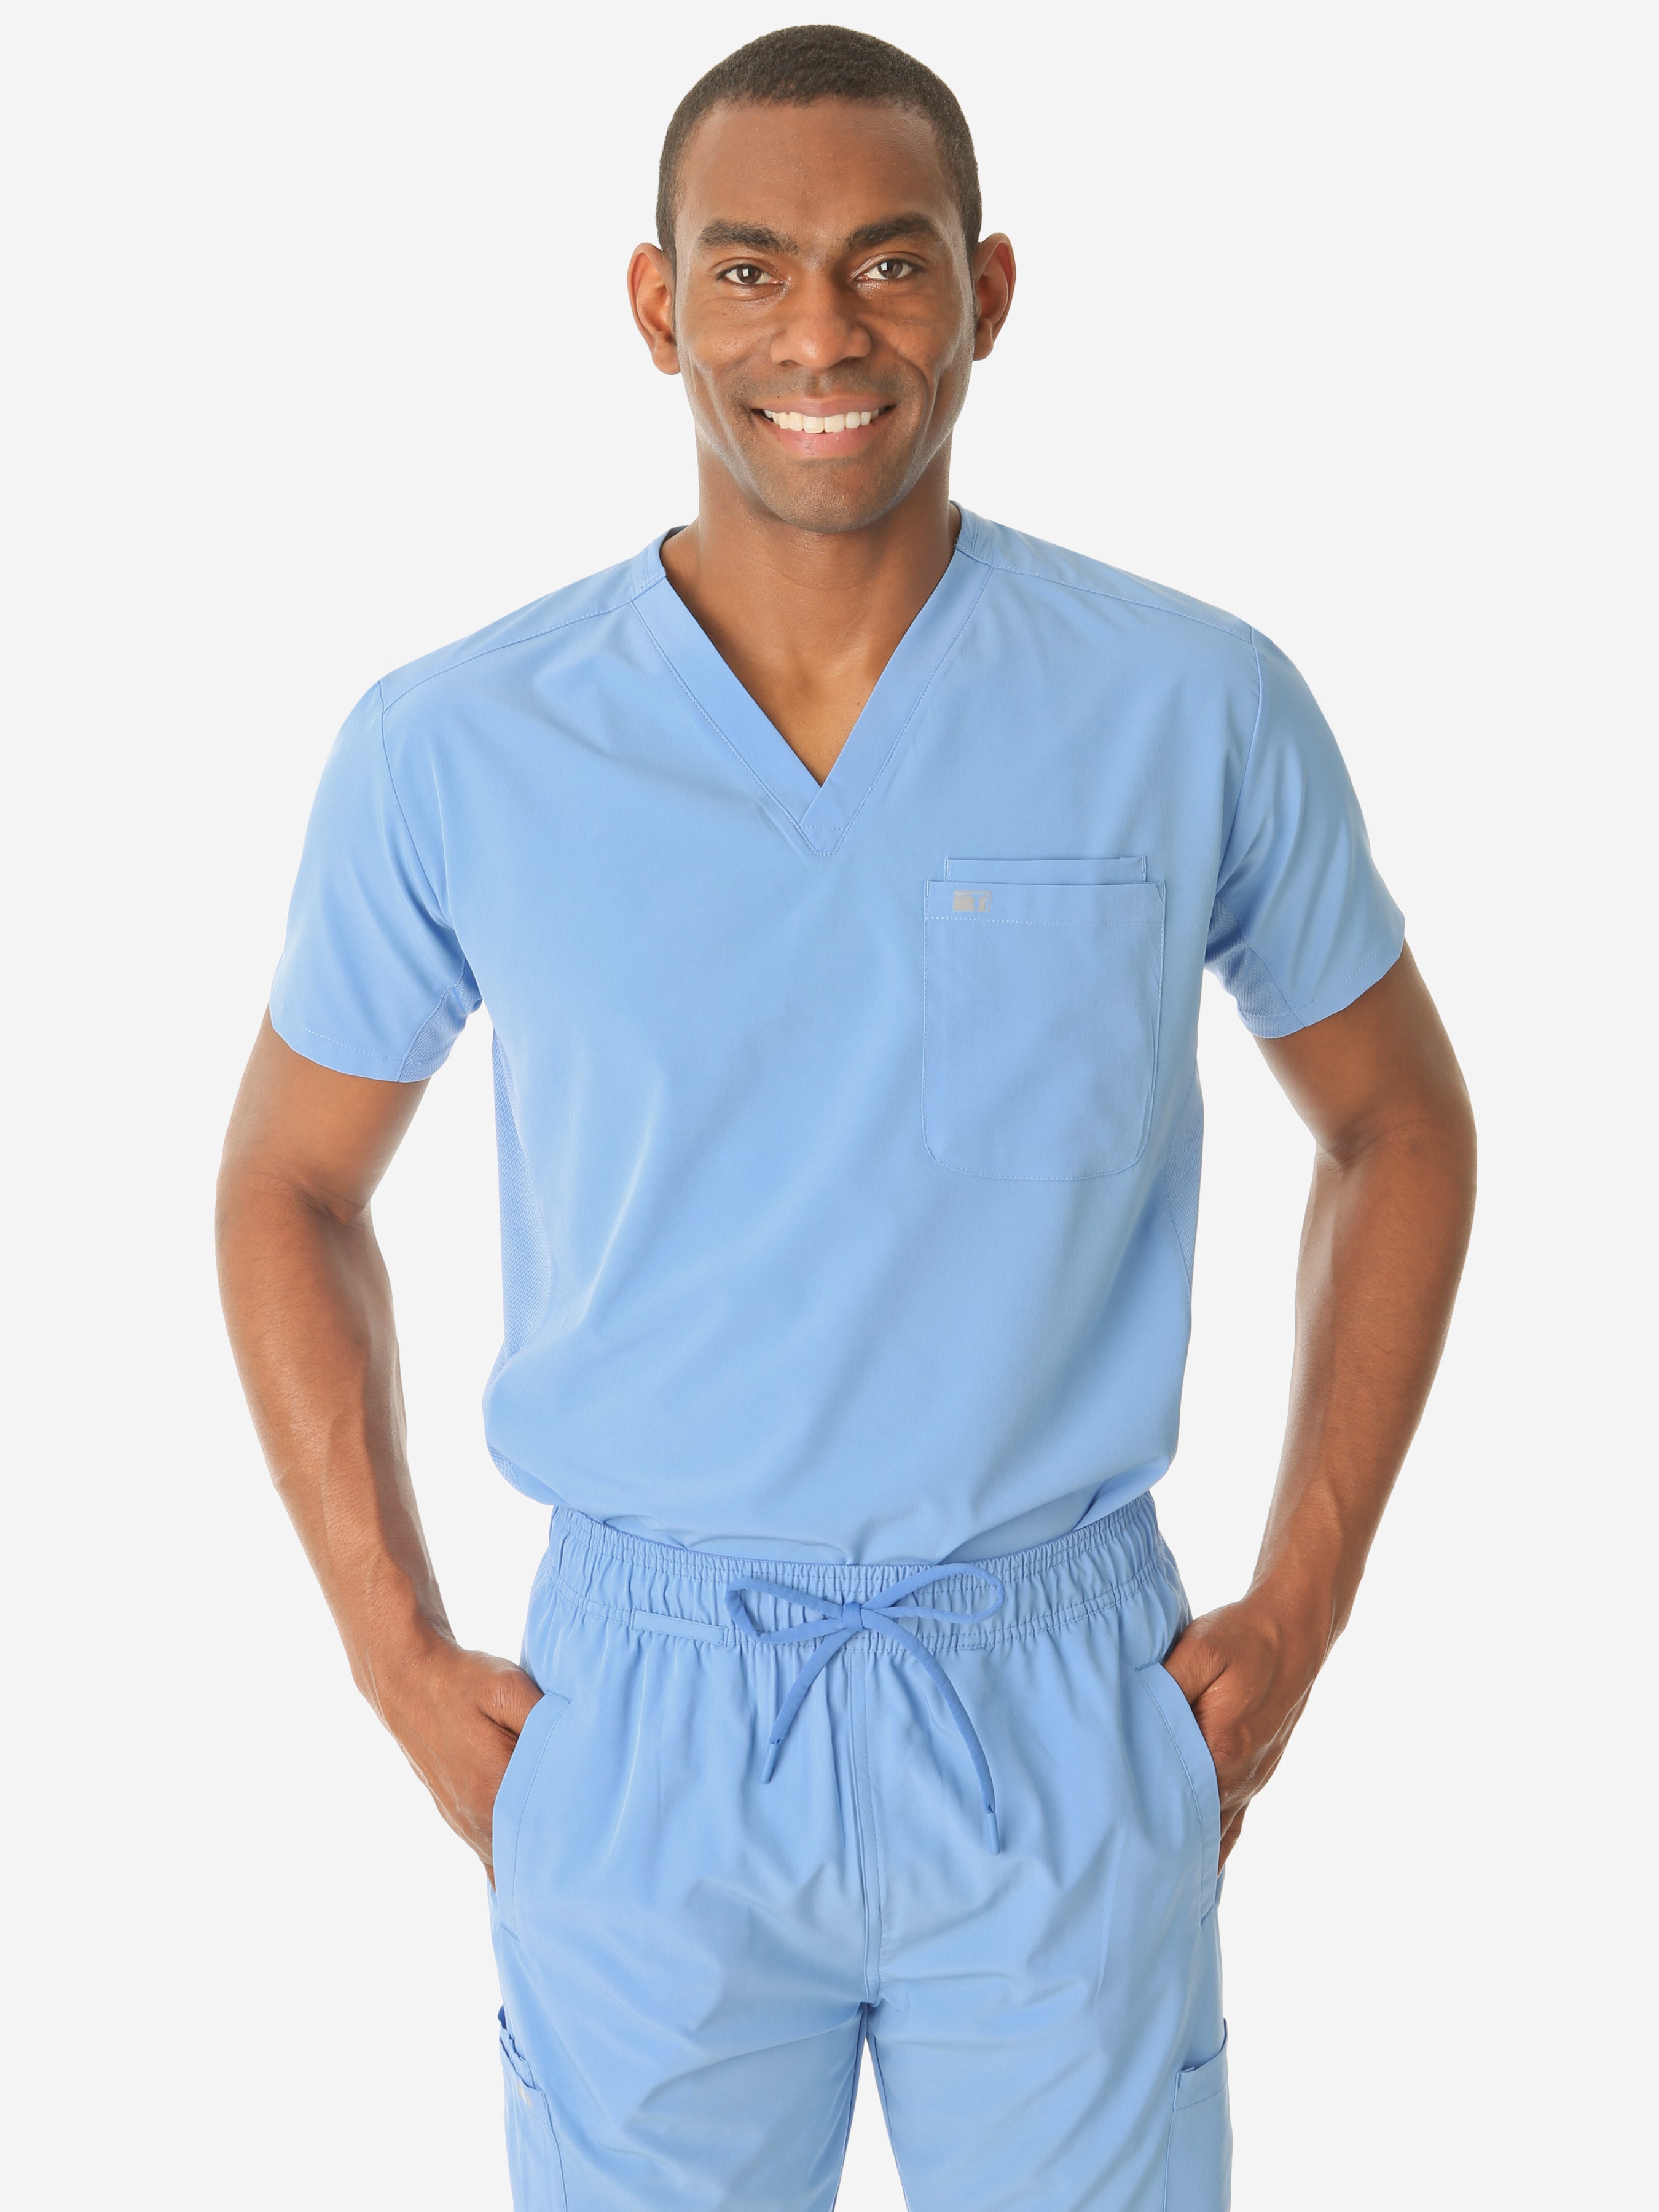 TiScrubs Men's Ceil Blue Double-Pocket Scrub Top Only Tucked Top Front